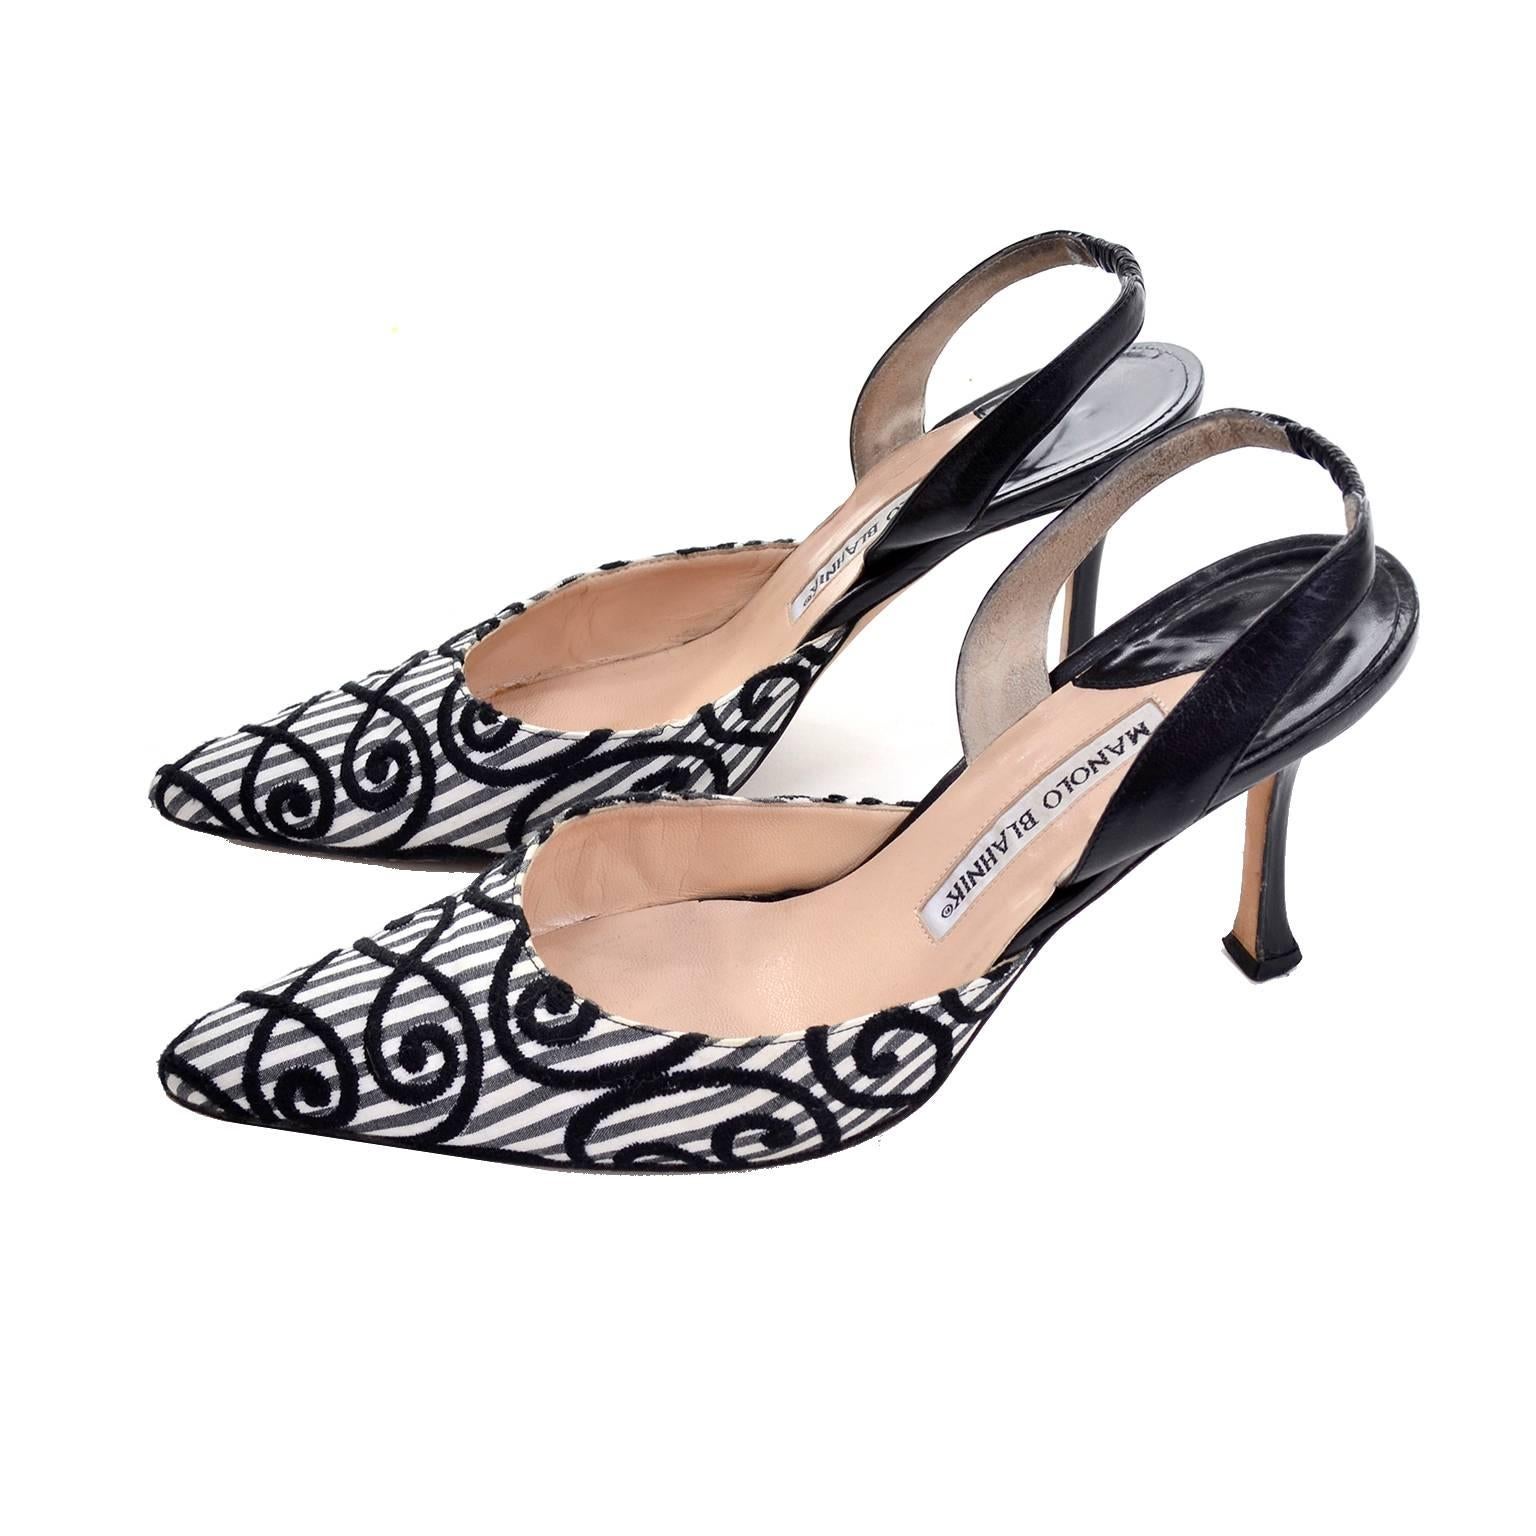 Manolo Blahnik Carolyne Sling Back Shoes in Black & White Swirls Size 37.5